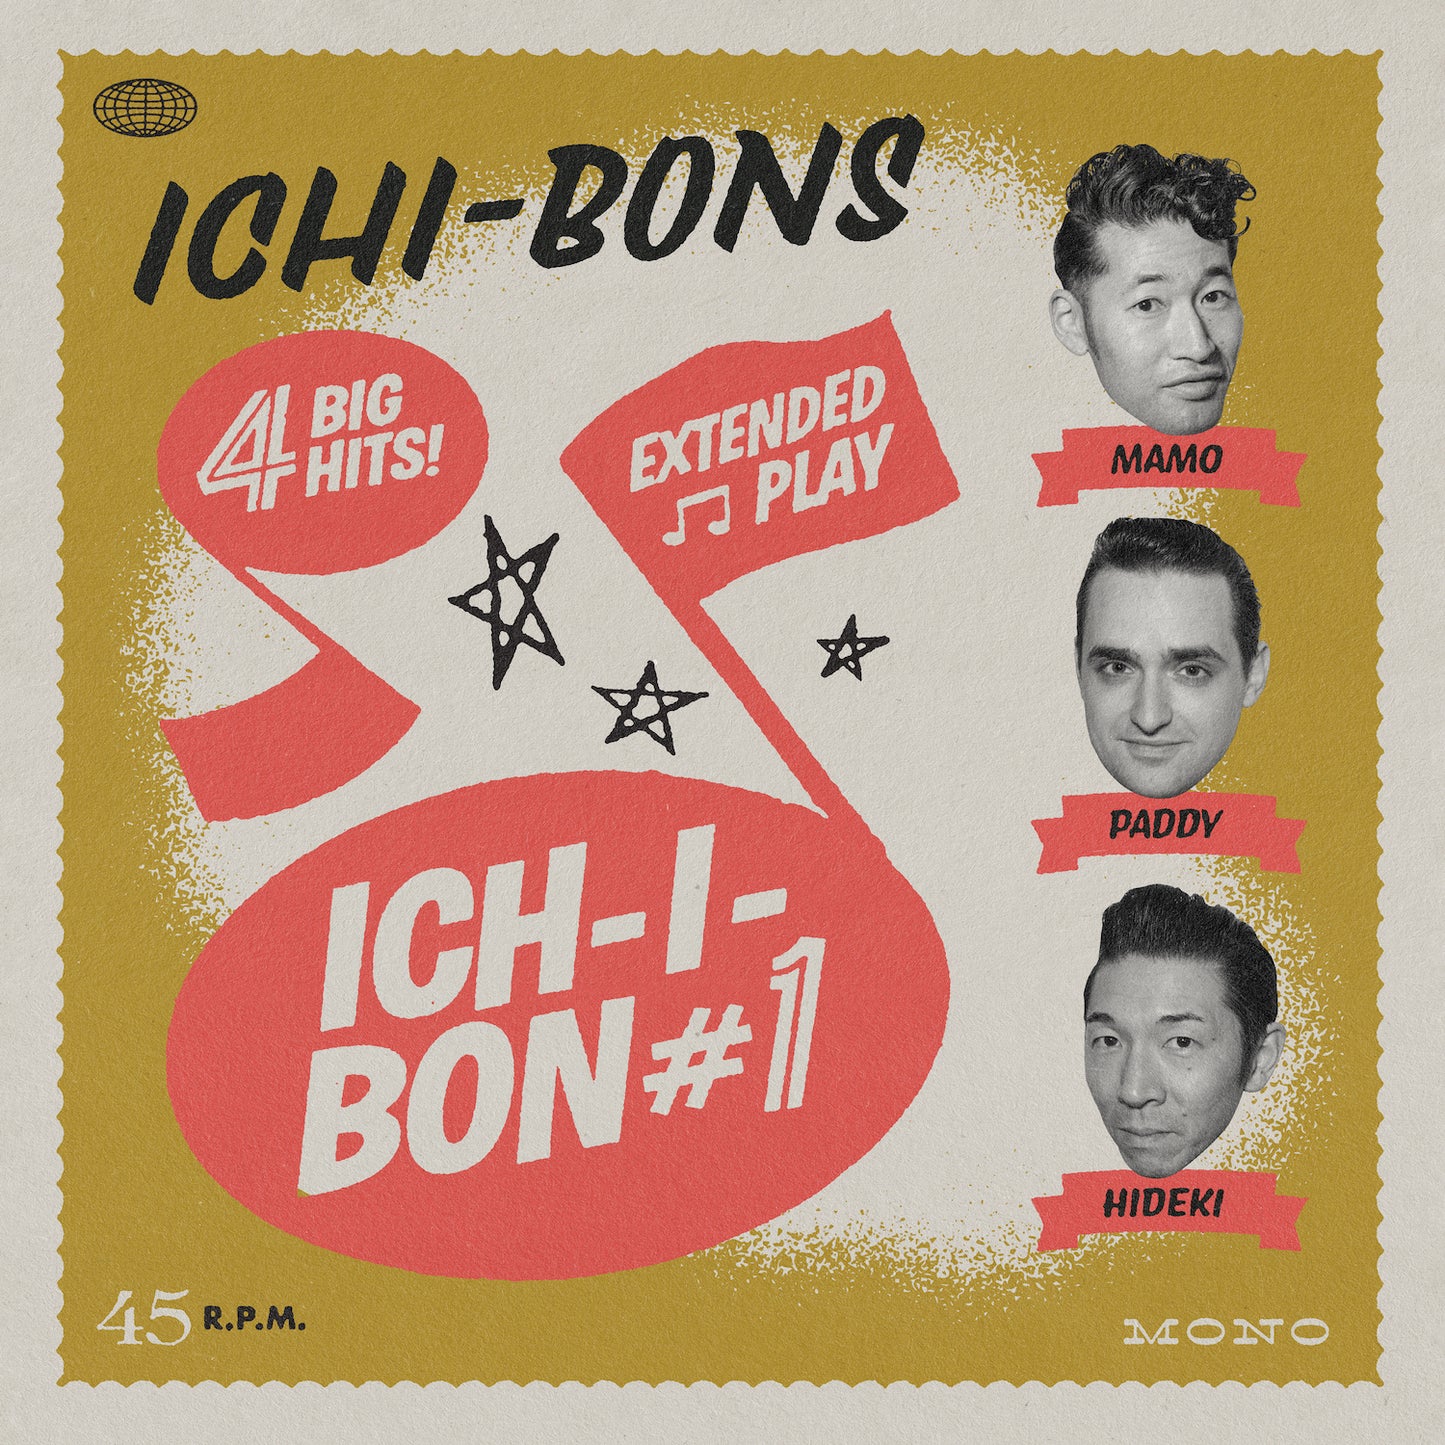 Ichi-Bons "Ich-I-Bon #1" EP